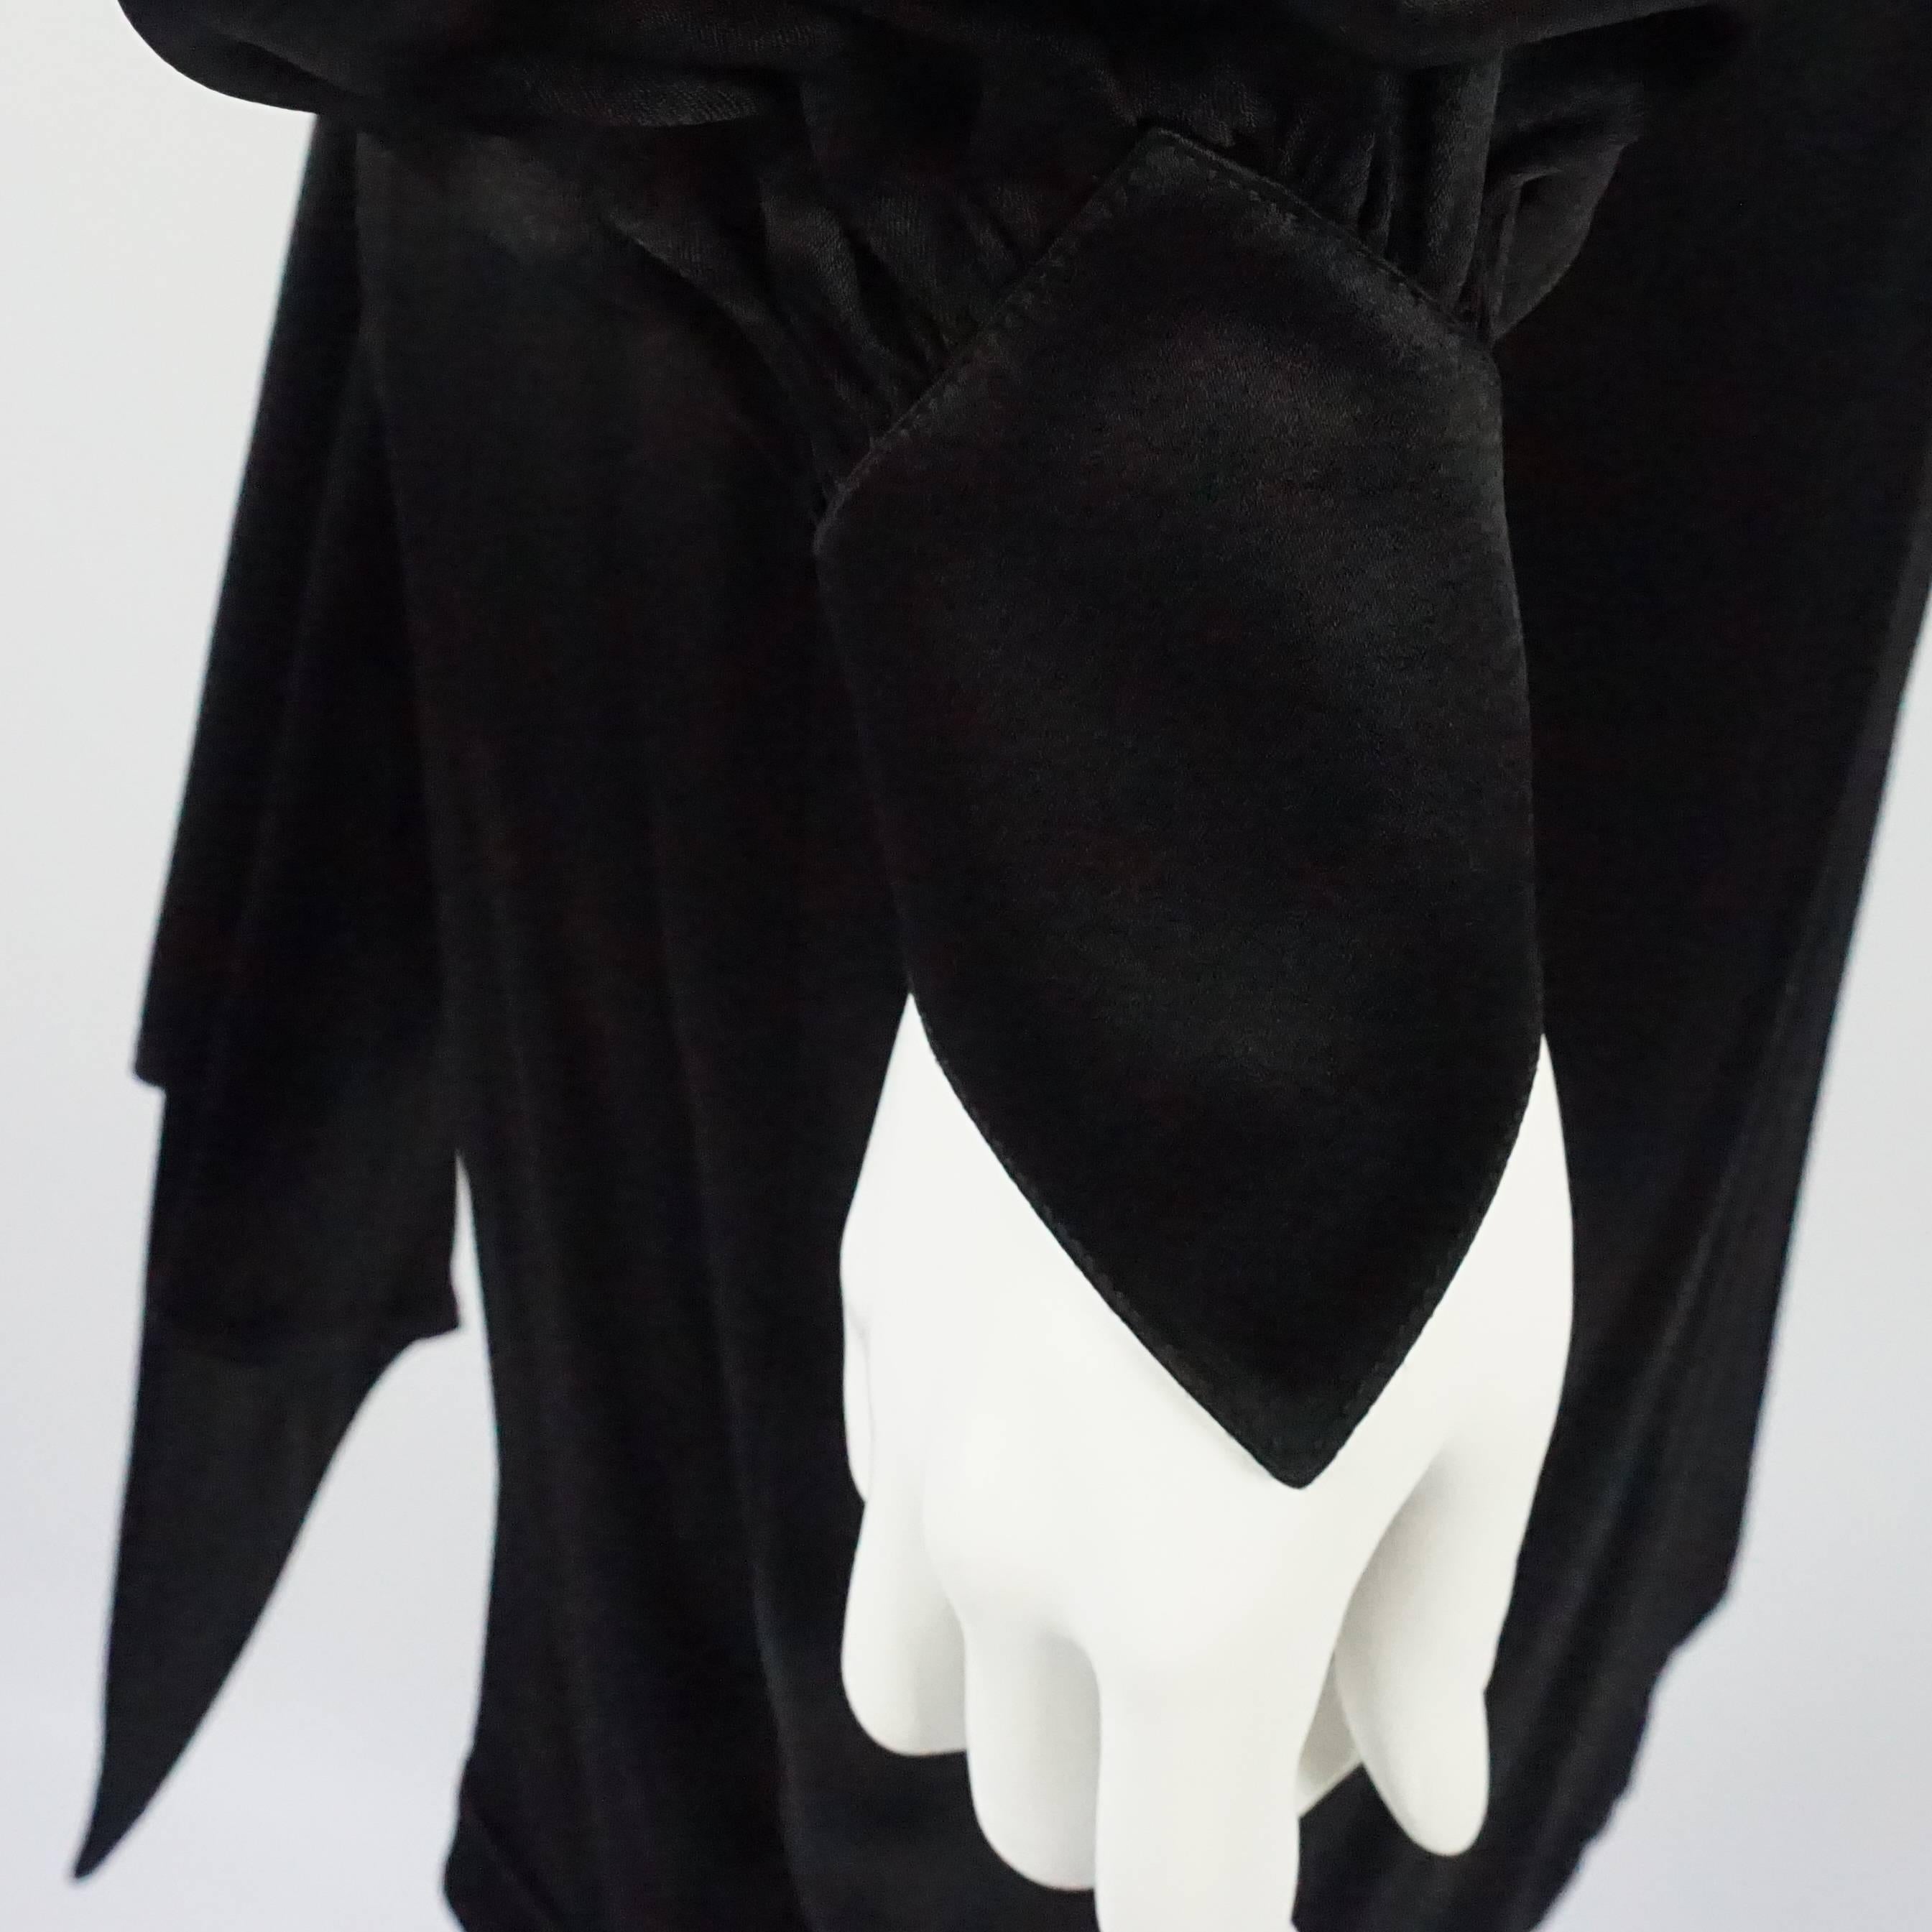 Women's Thierry Mugler Black Satin Dress with Back Bow - 40 - Circa 1980s